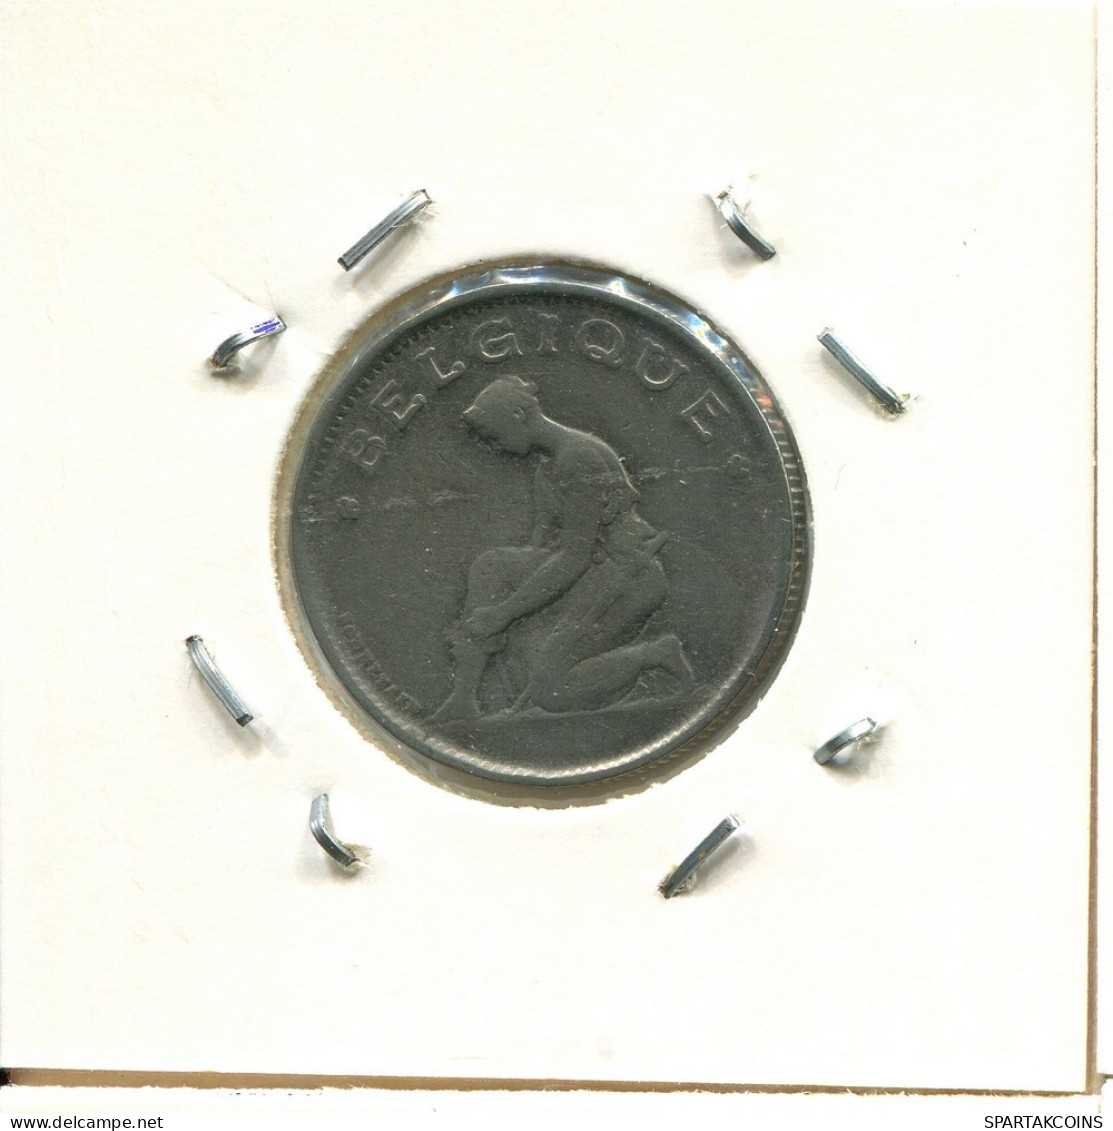 1 FRANC 1928 FRENCH Text BELGIUM Coin #BA472.U.A - 1 Franco